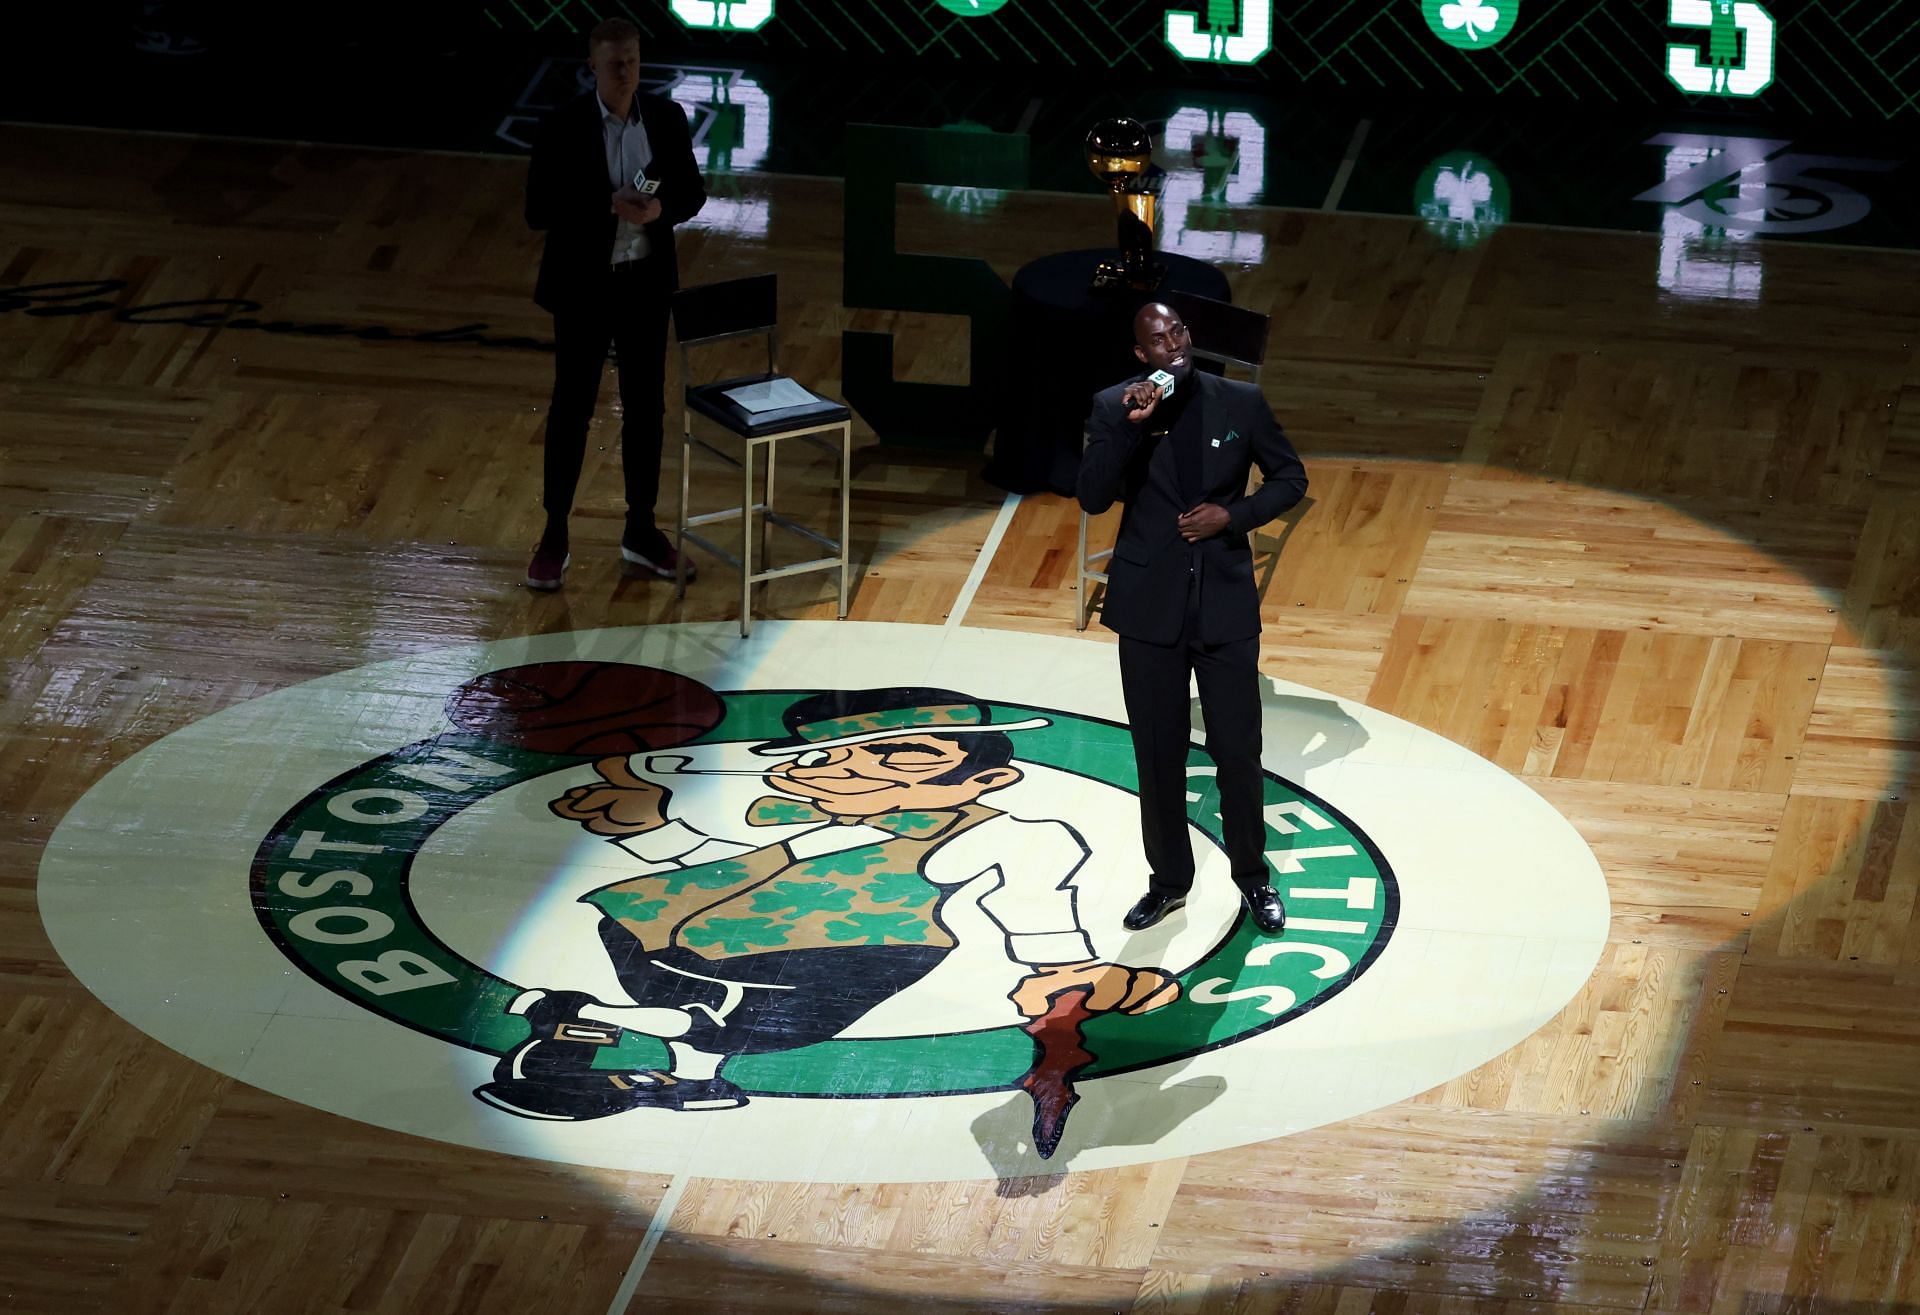 Kevin Garnett won a championship with the Boston Celtics in 2008.